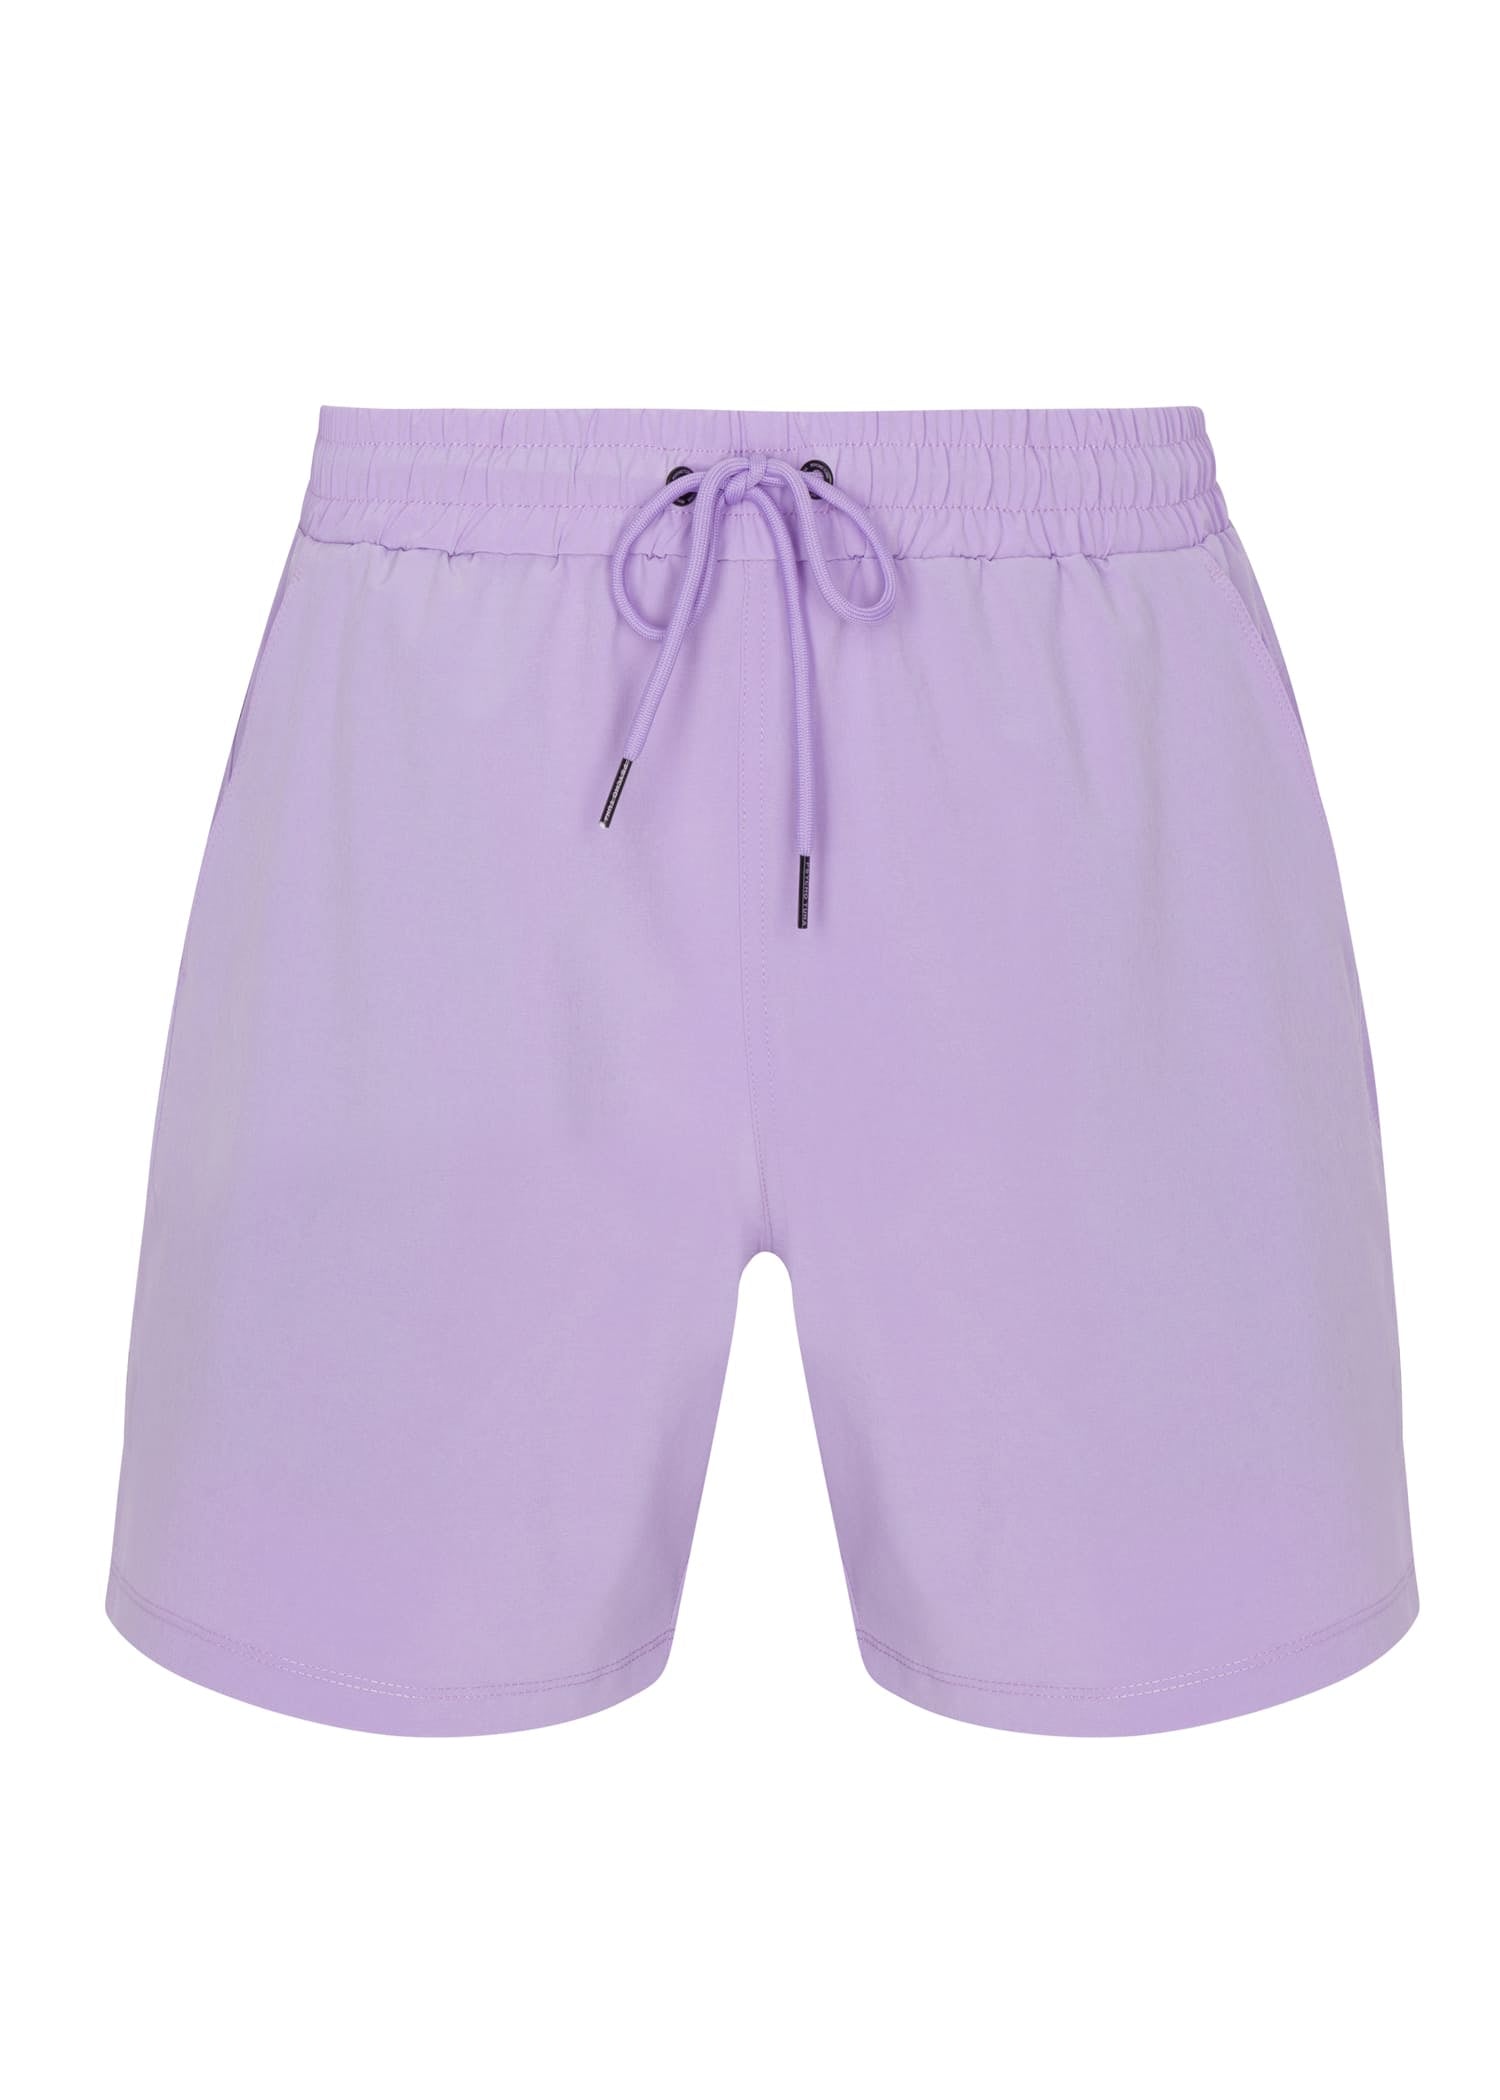 Soft Surroundings, Shorts, Nwt Soft Surroundings Superla Stretch  Palladian Shorts Purple Iris Size Medium